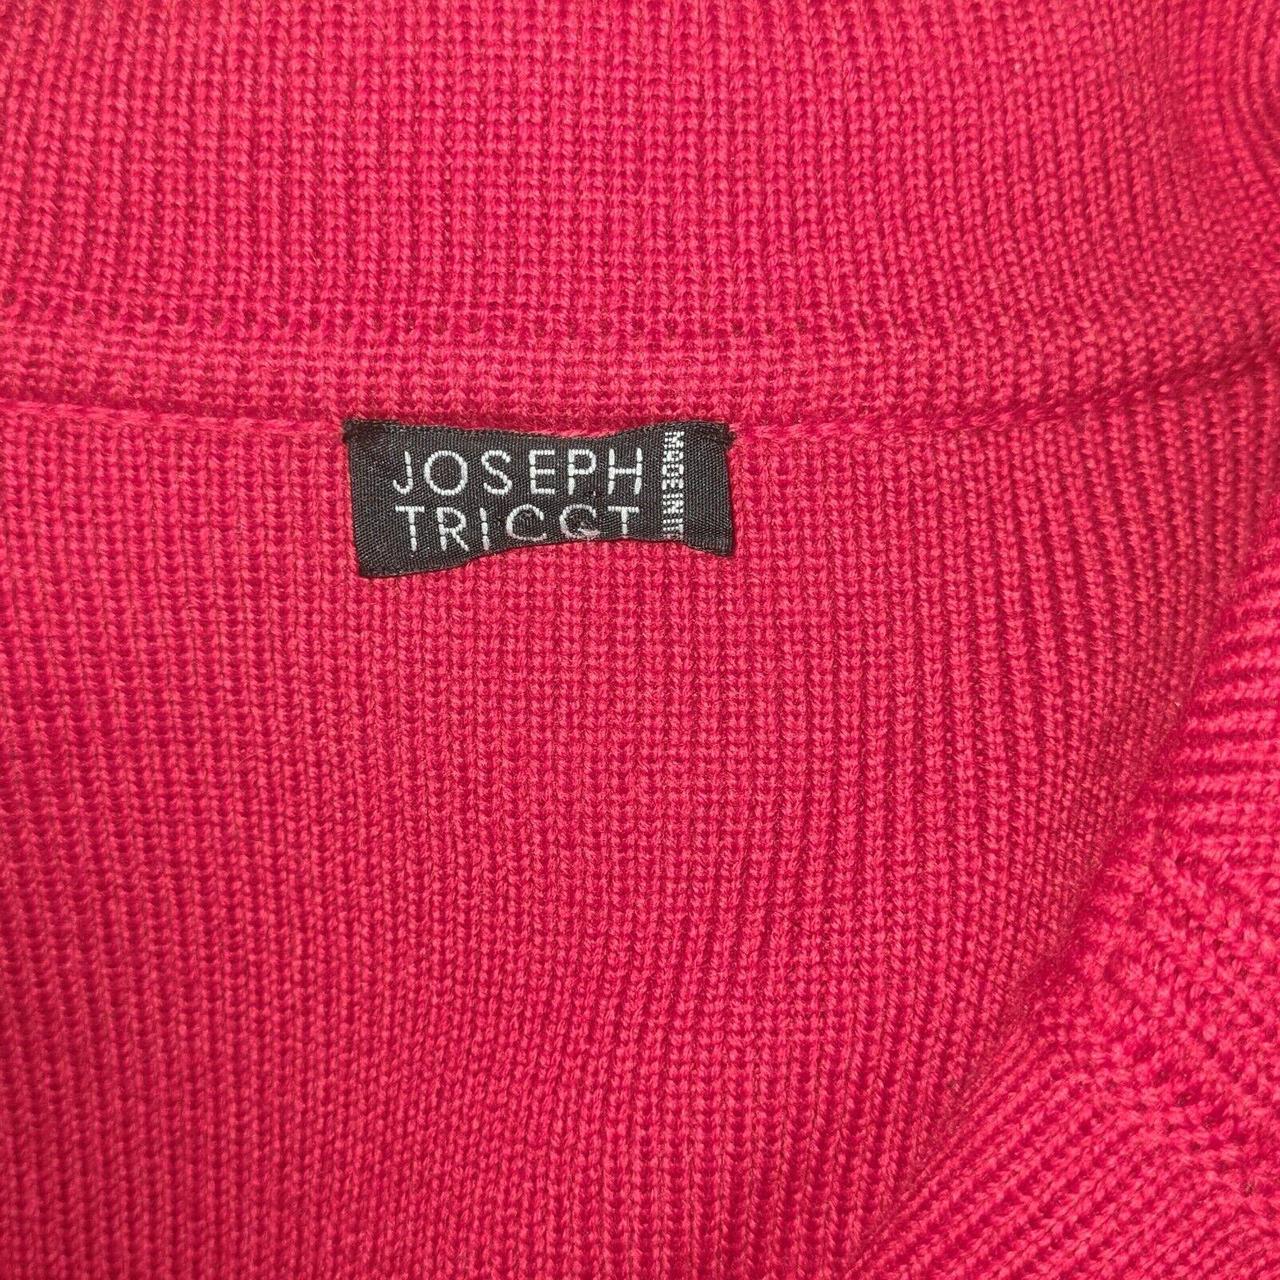 Joseph Tricot (M) Red Wool Cardigan Size UK 12 14 EU... - Depop